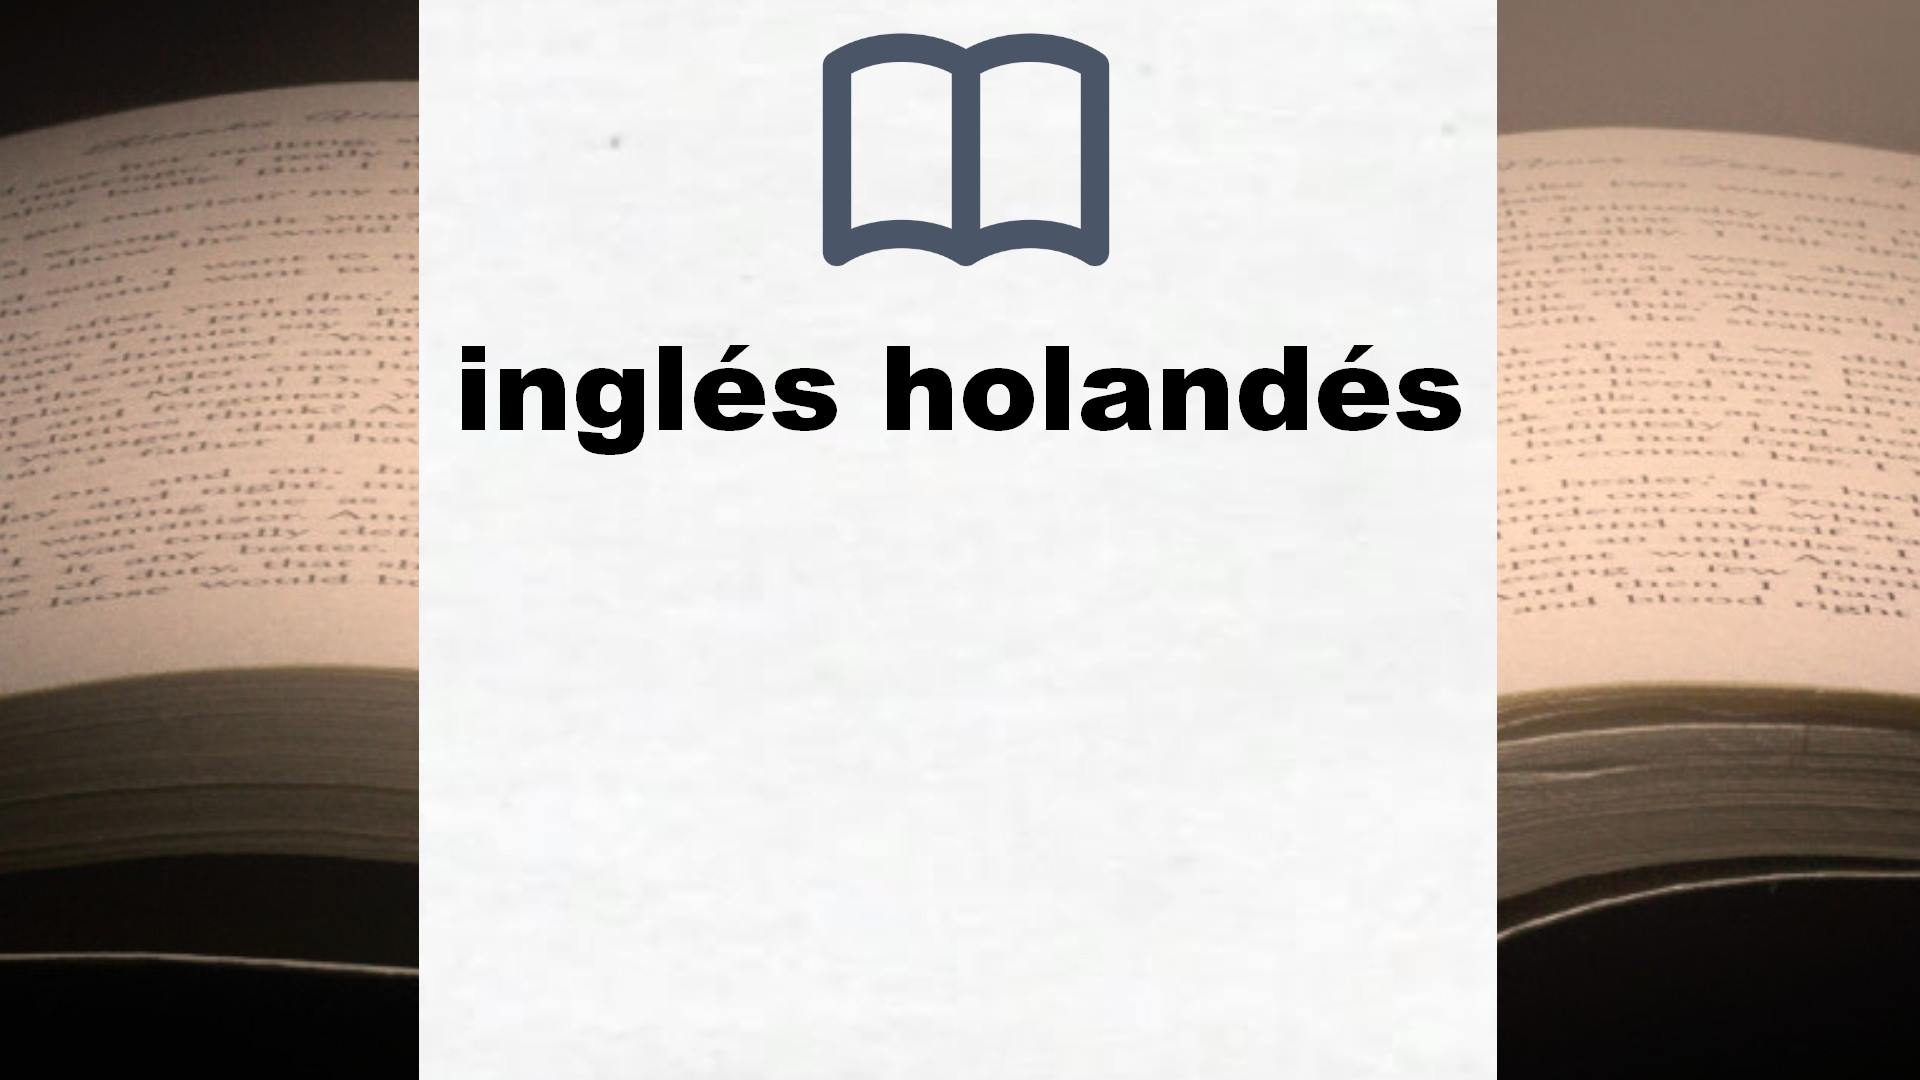 Libros sobre inglés holandés